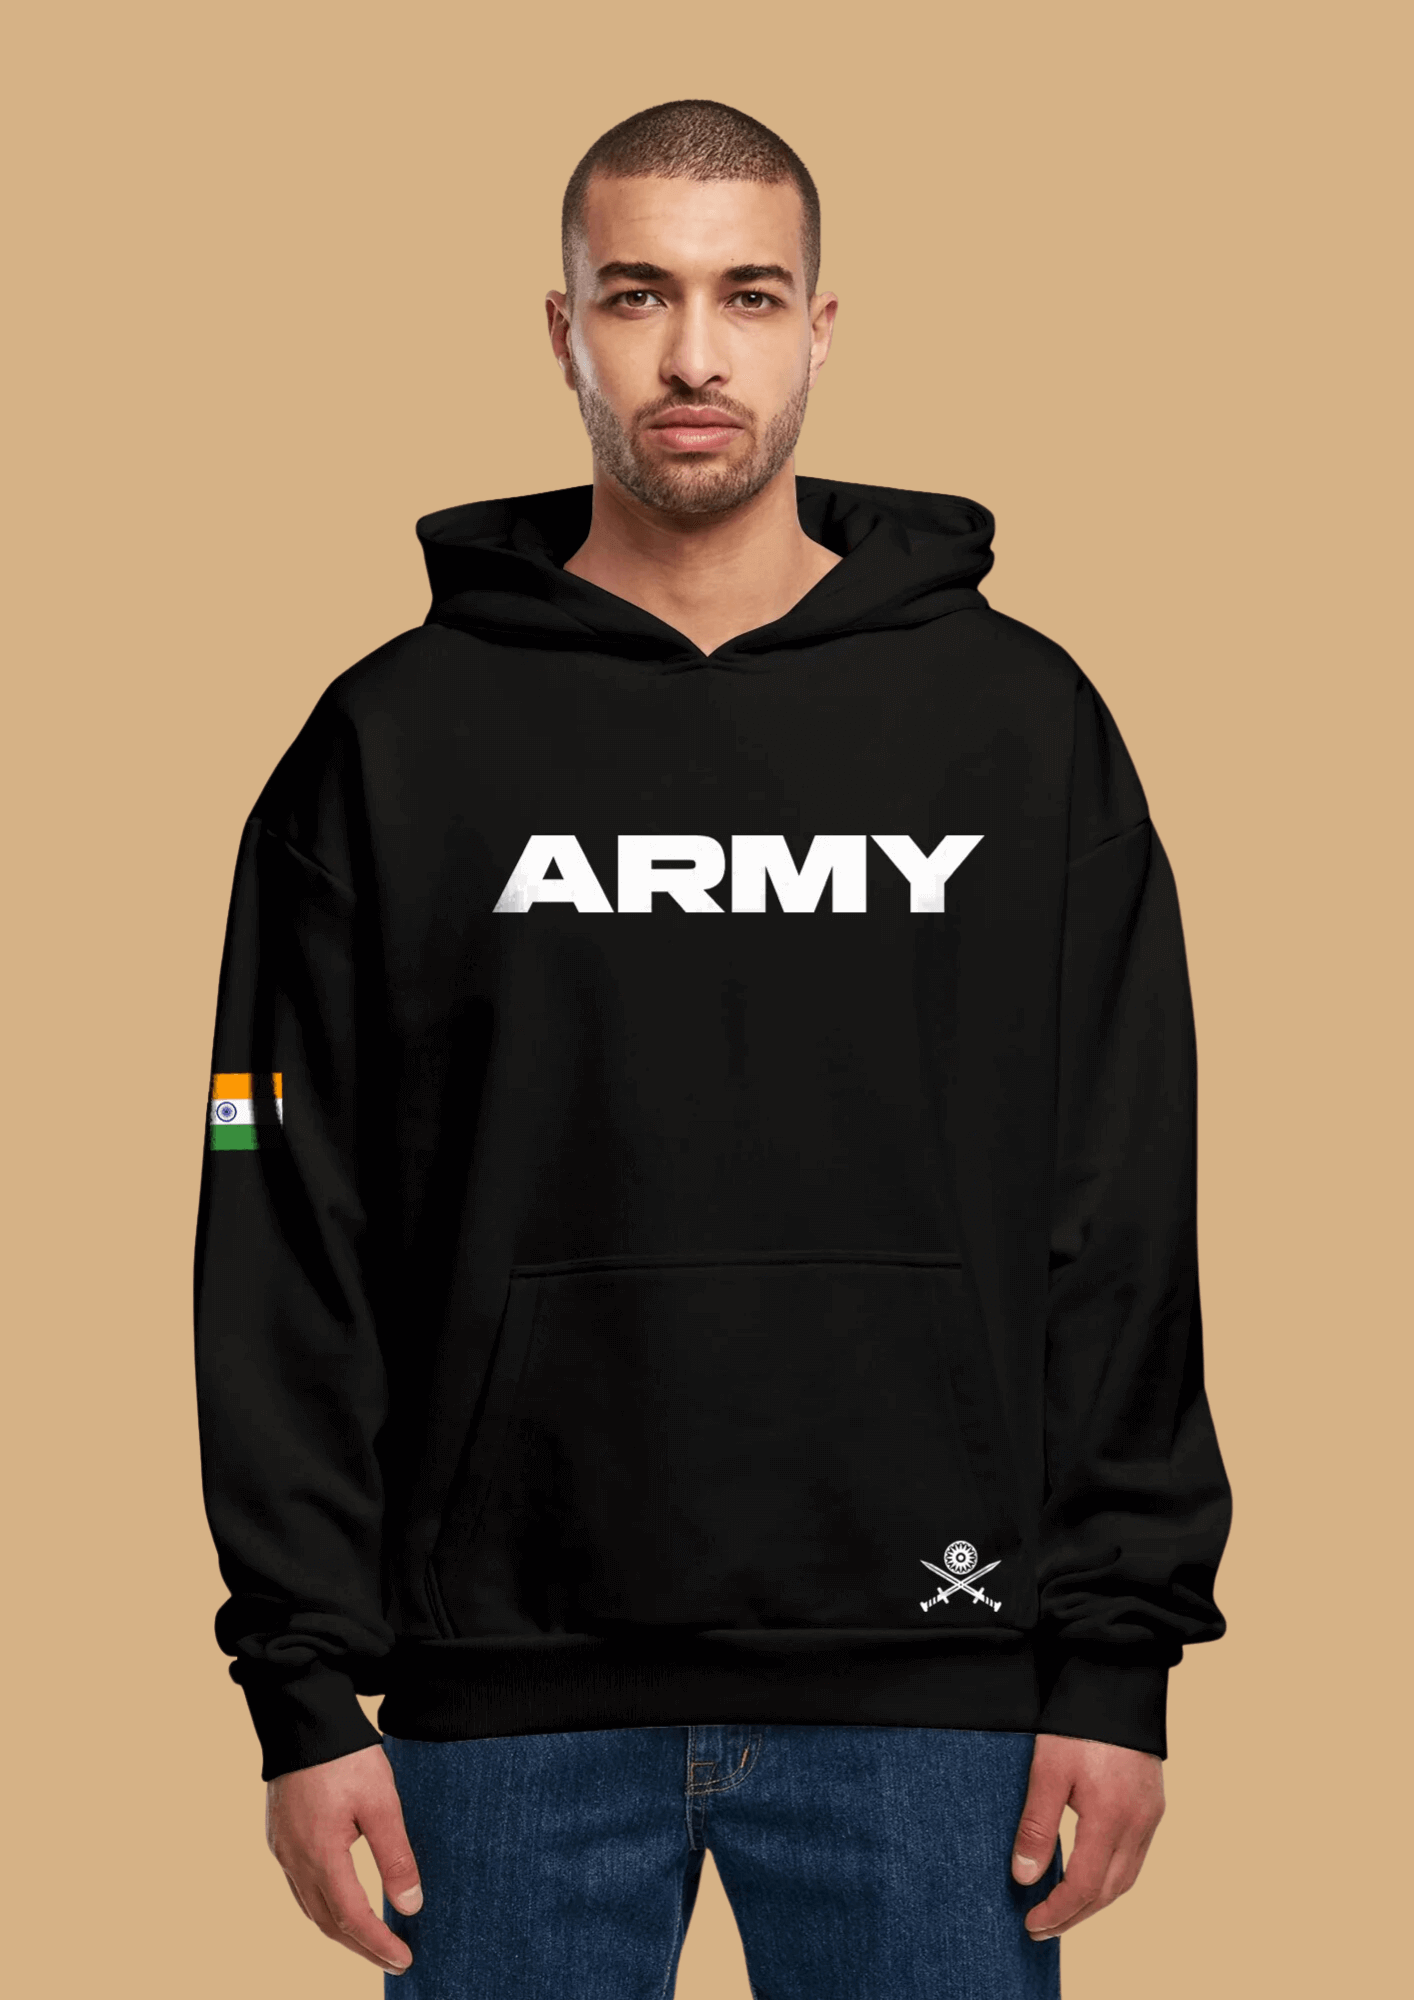 Army printed hoodie by offmint